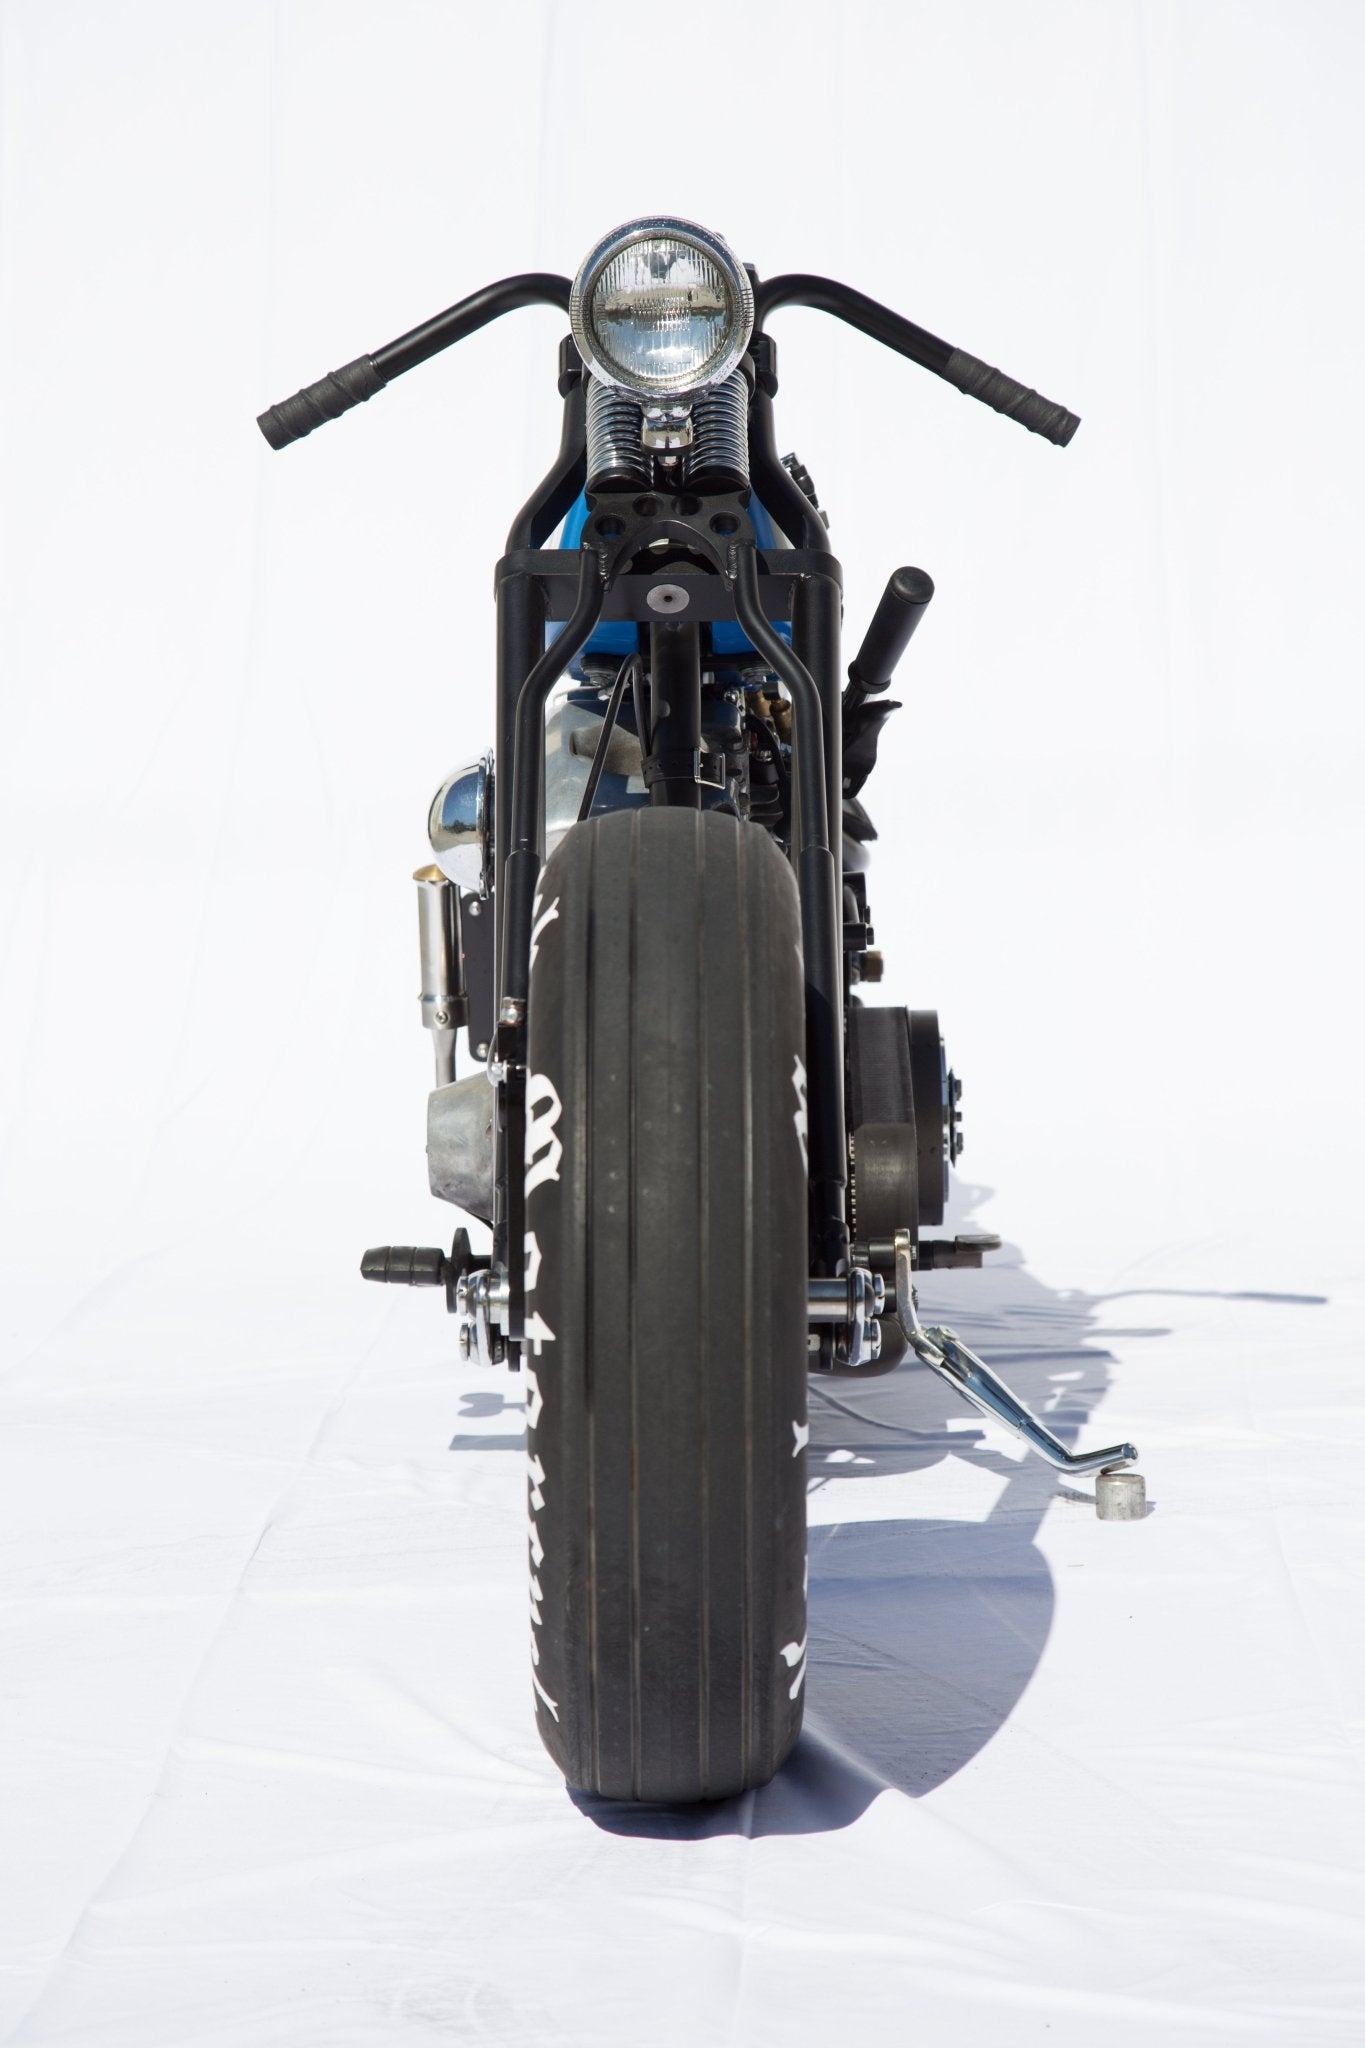 Nash Motorcycle KO Chopper - TheArsenale